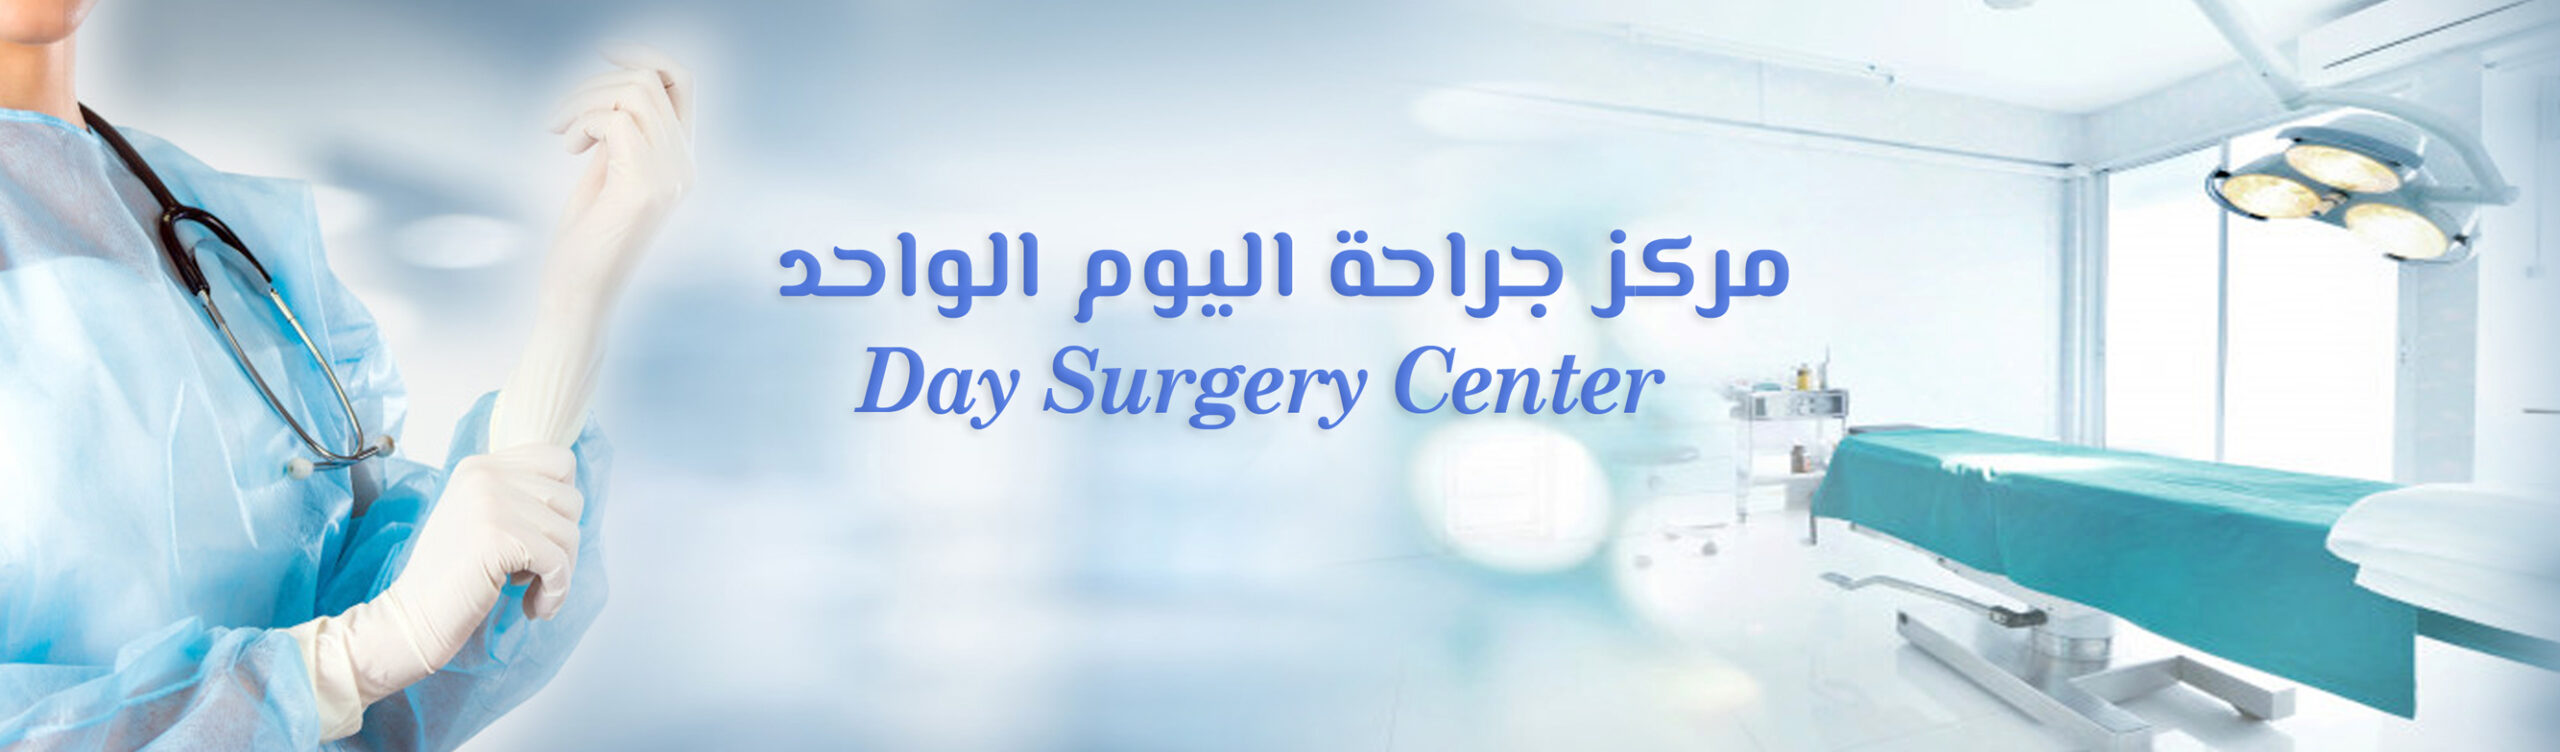 Day surgery center